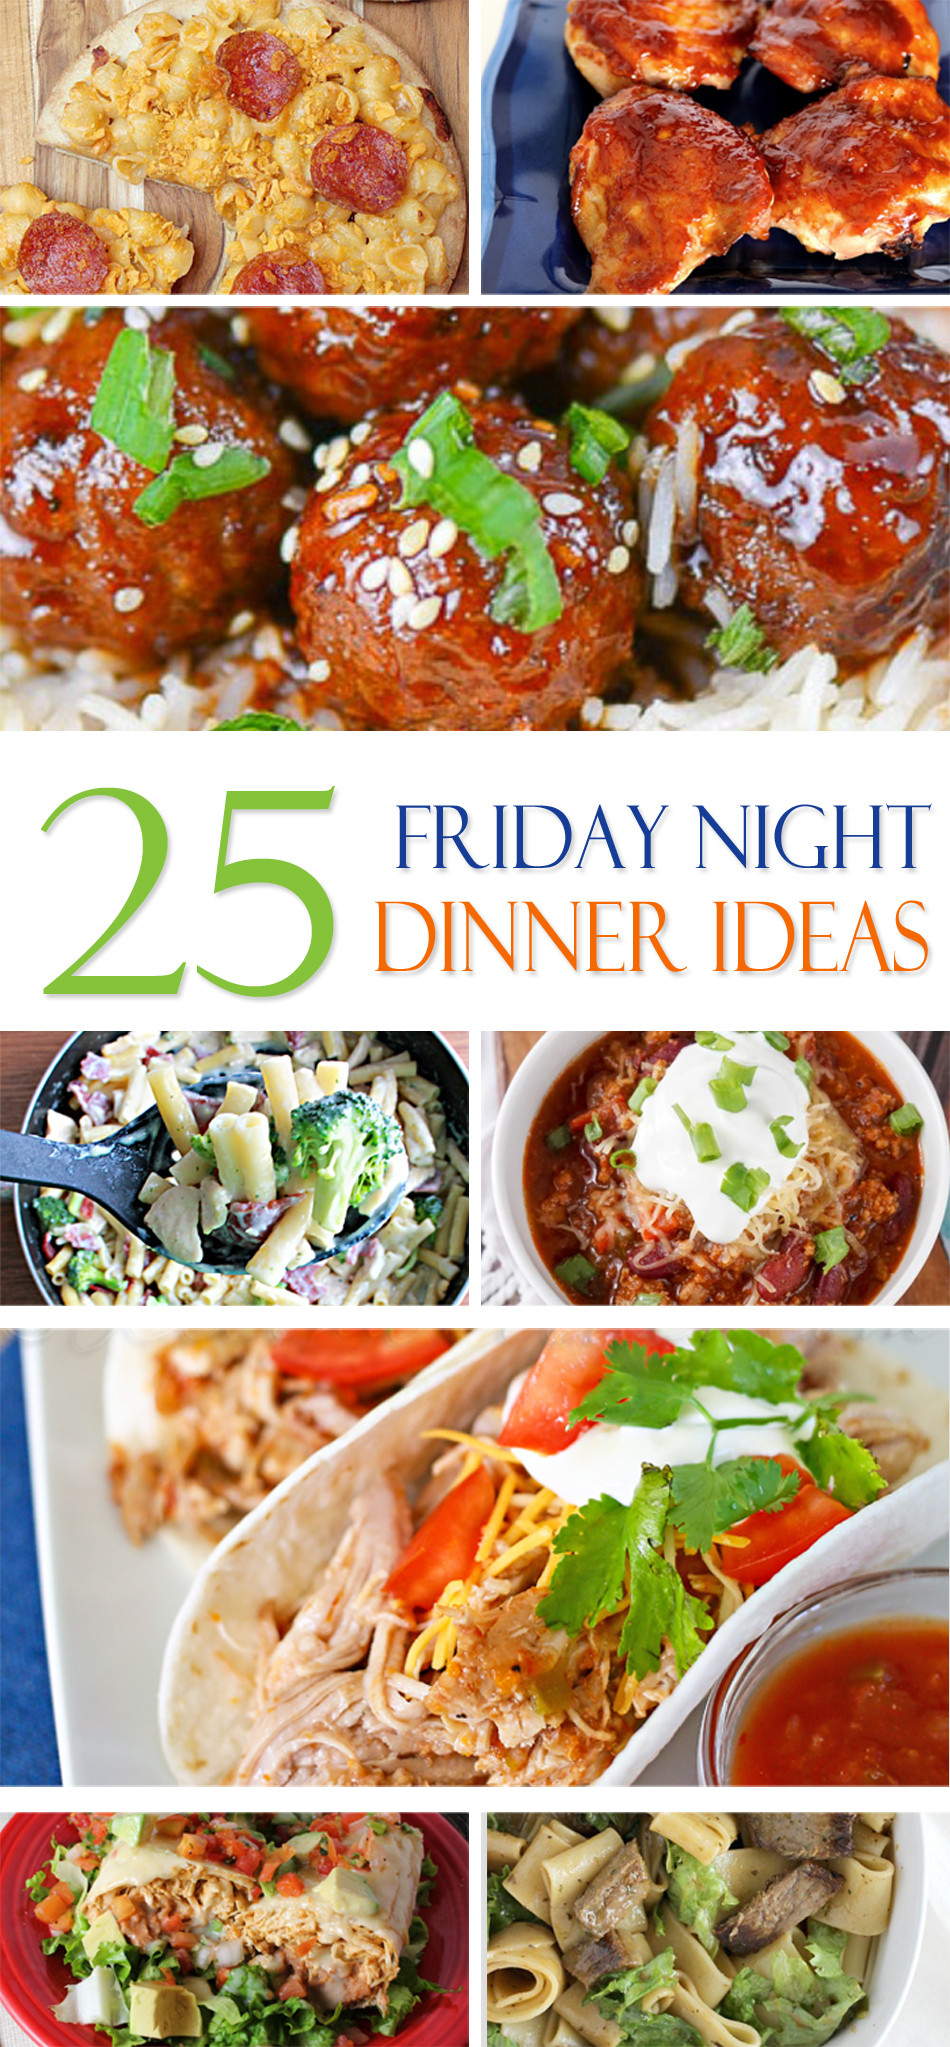 Friday Night Dinners Ideas
 25 Friday Night Dinner Ideas Kleinworth & Co